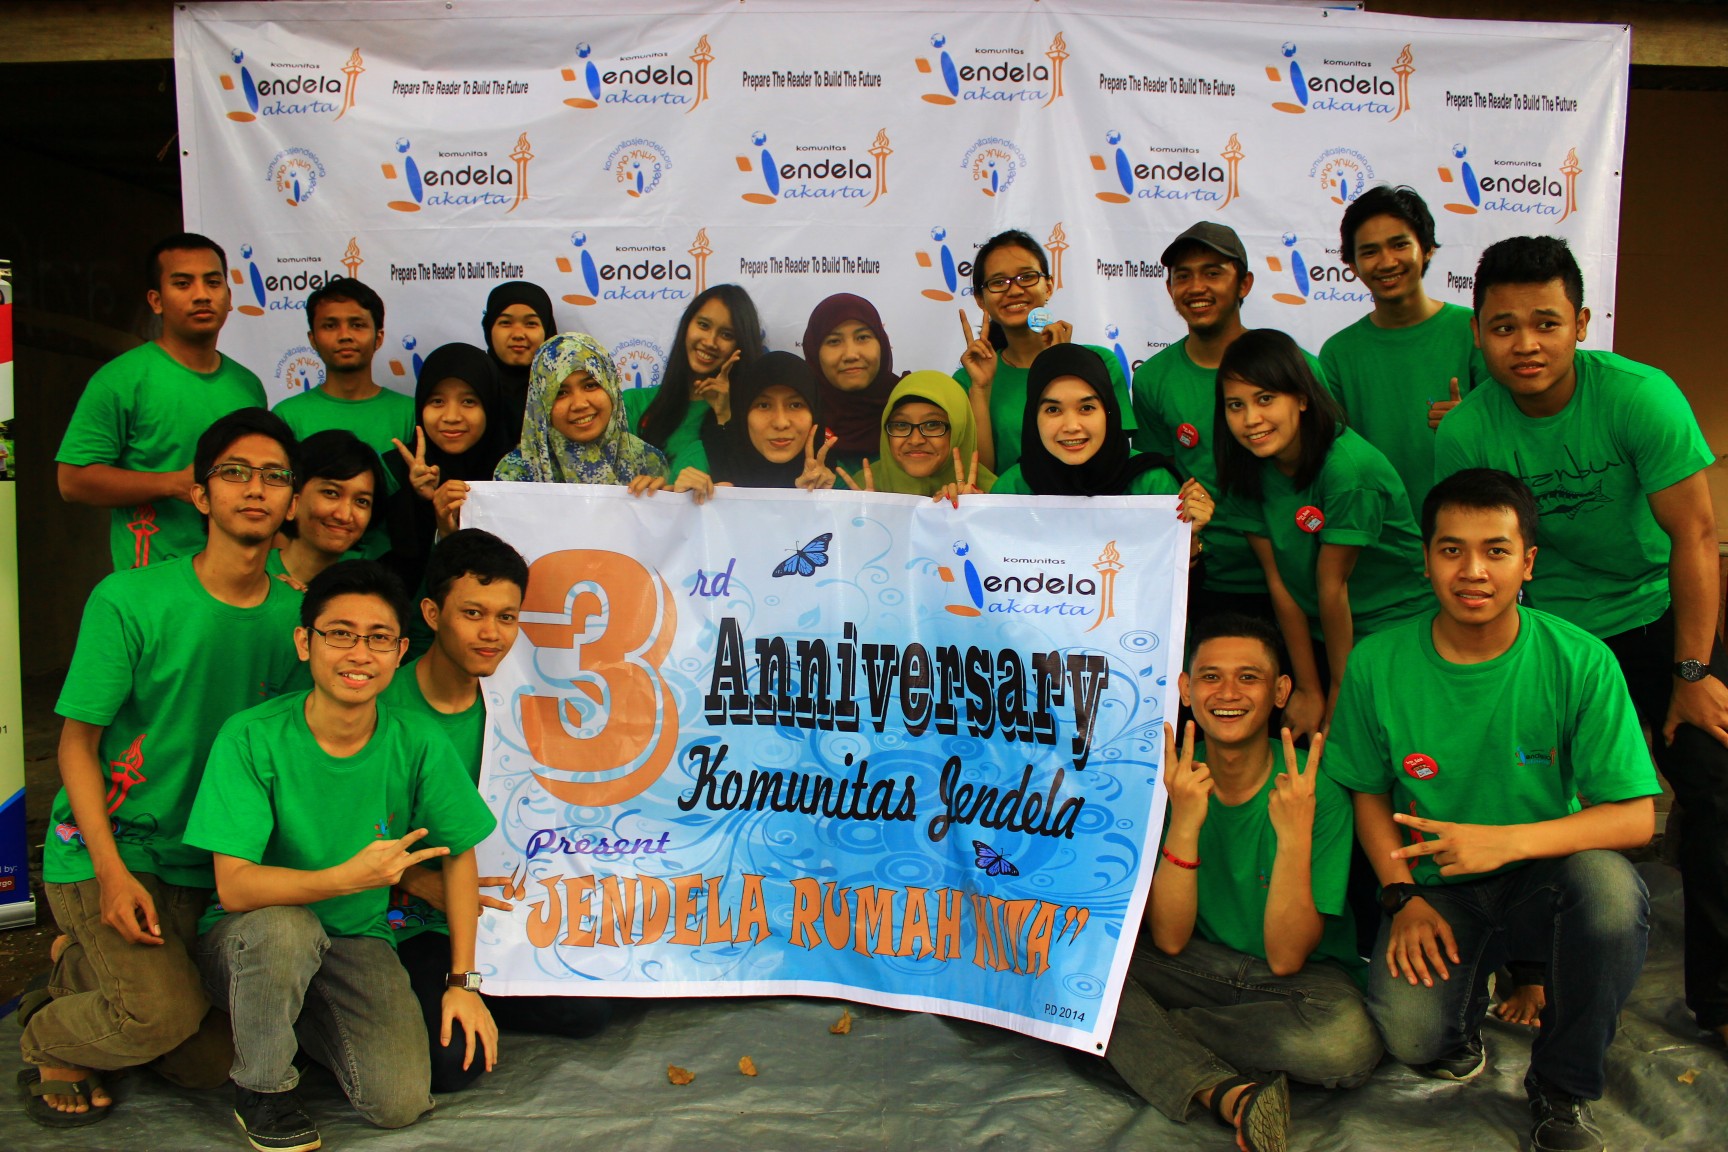 3rd Anniversary Komunitas Jendela At Jakarta Komunitas Jendela